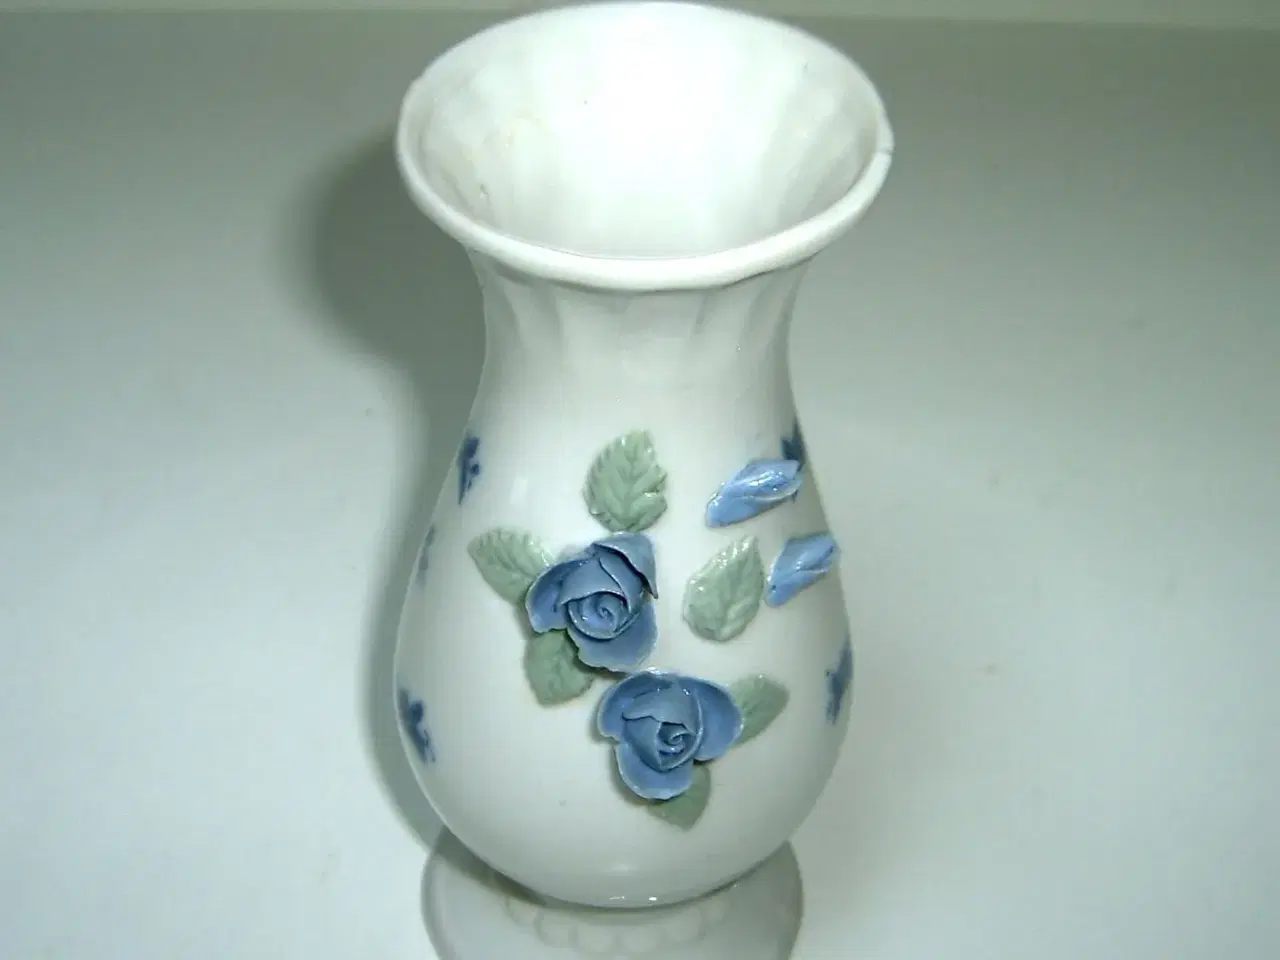 Billede 1 - Gl. Vase med blå blomster på, Nedsat